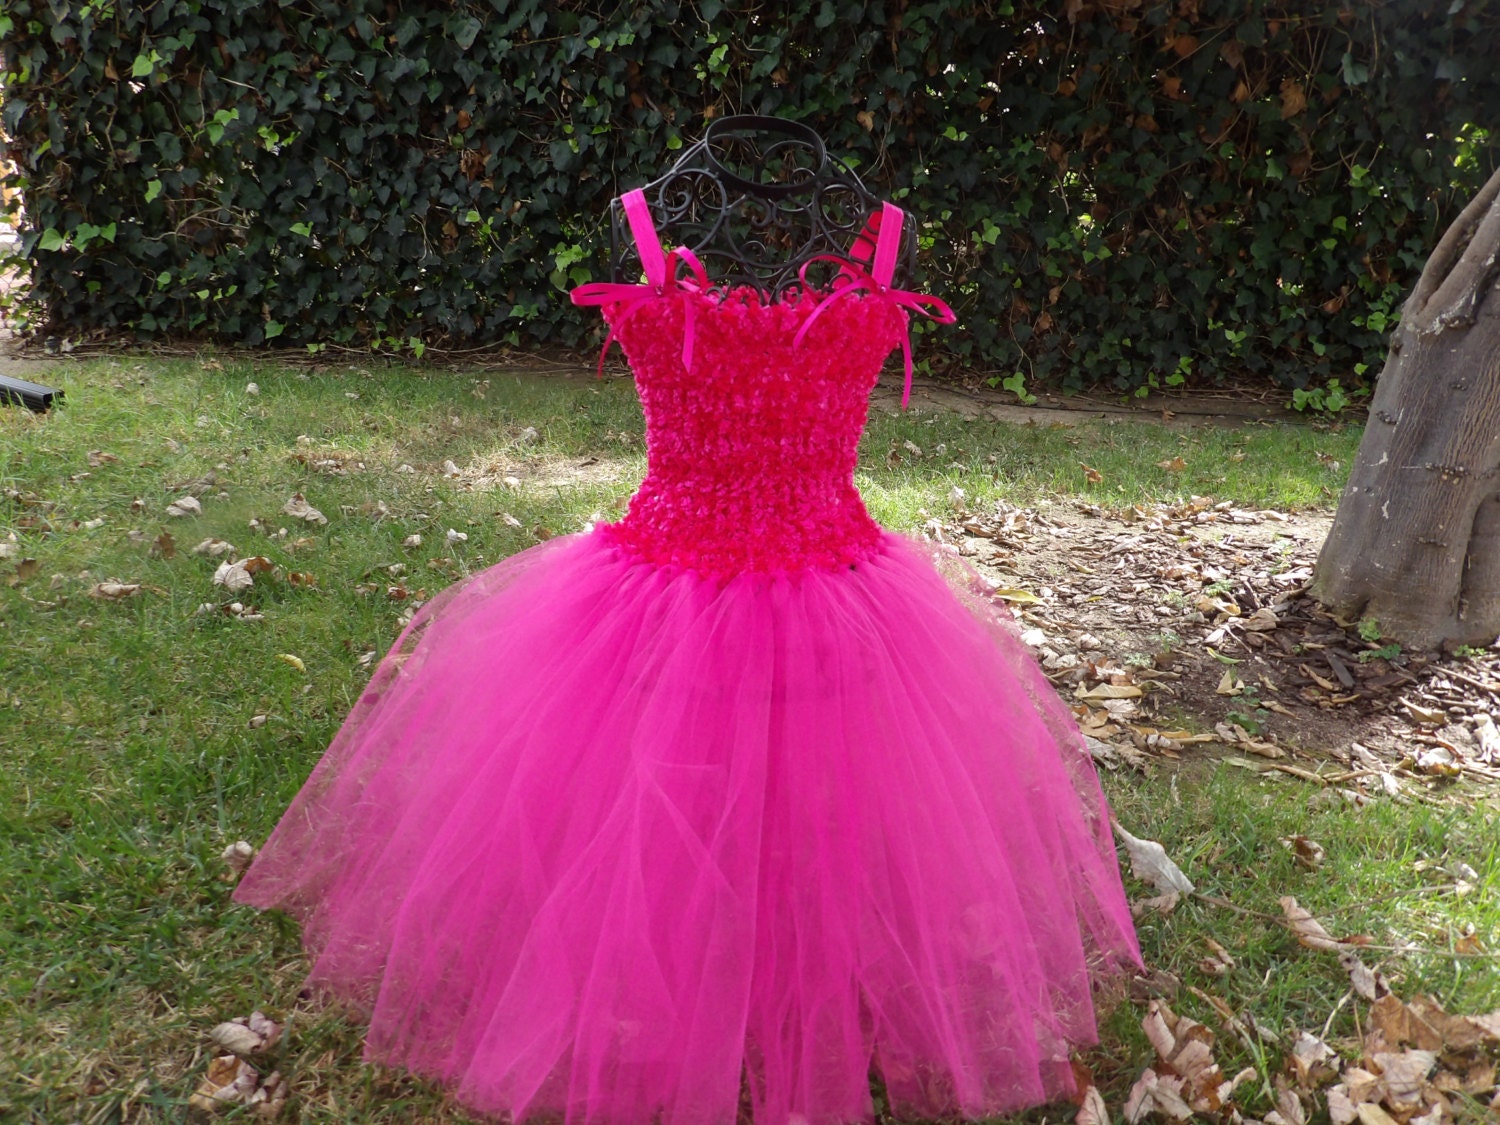 Pinkalicious pink tutu dress